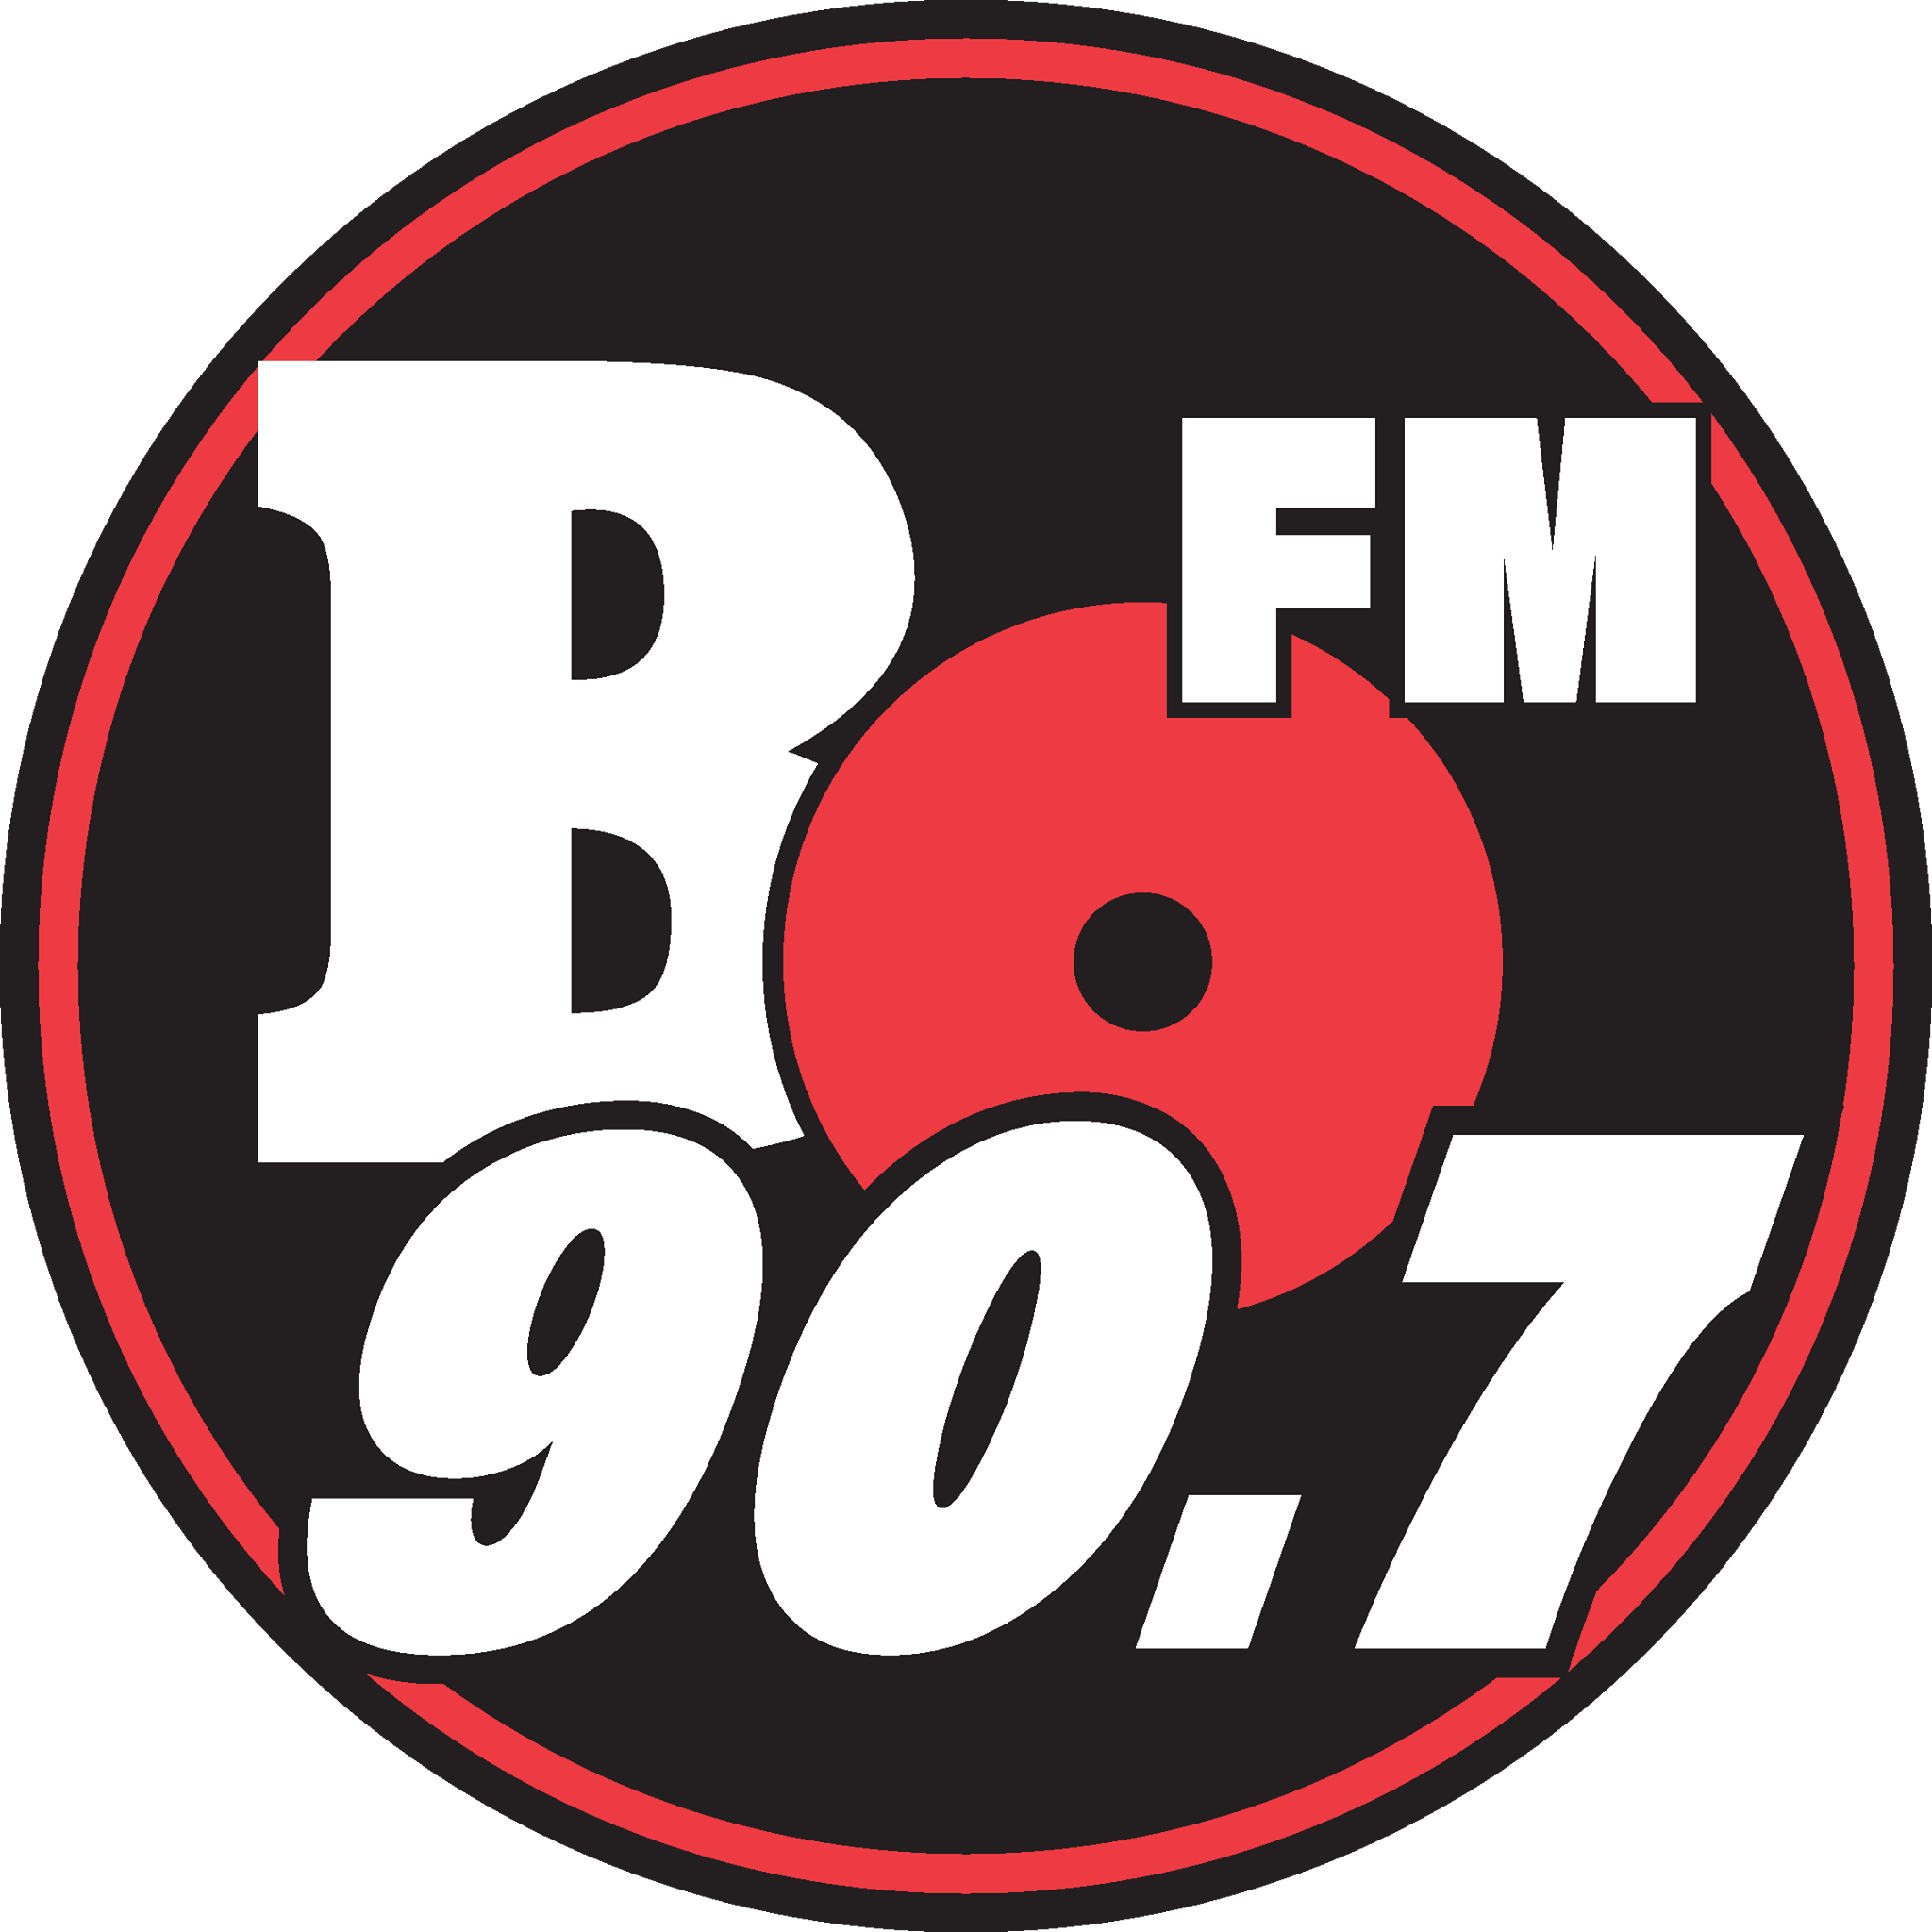 2017 logo commandite BOFM radio